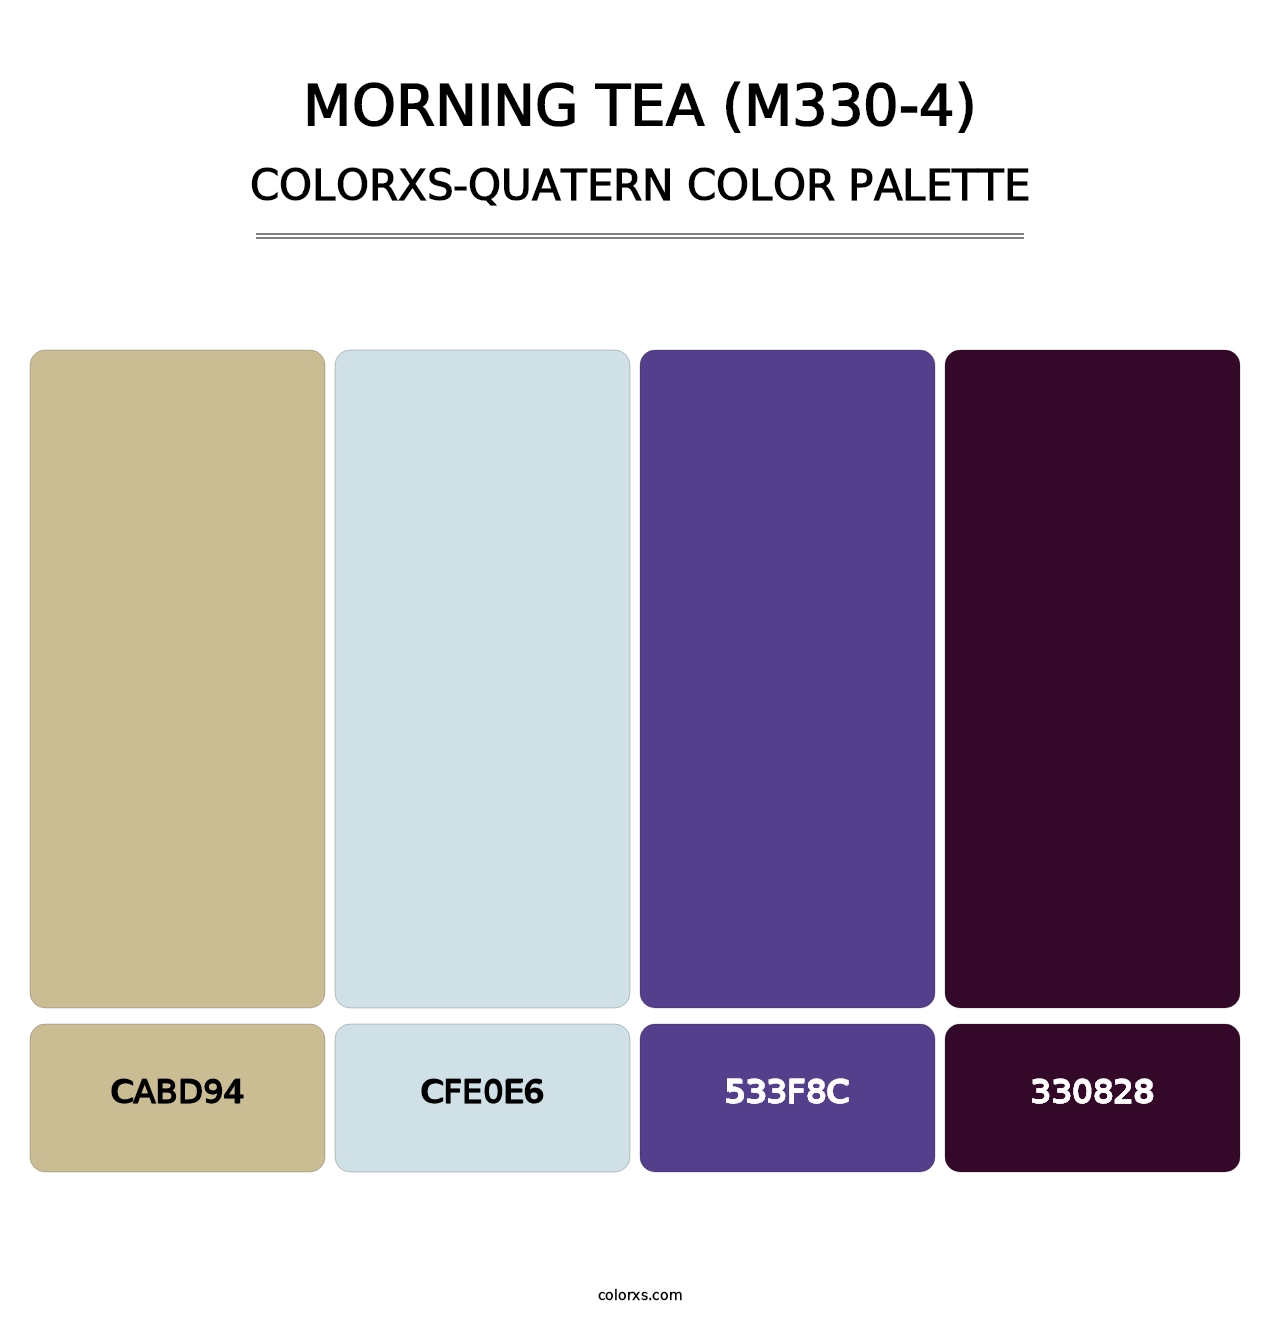 Morning Tea (M330-4) - Colorxs Quatern Palette